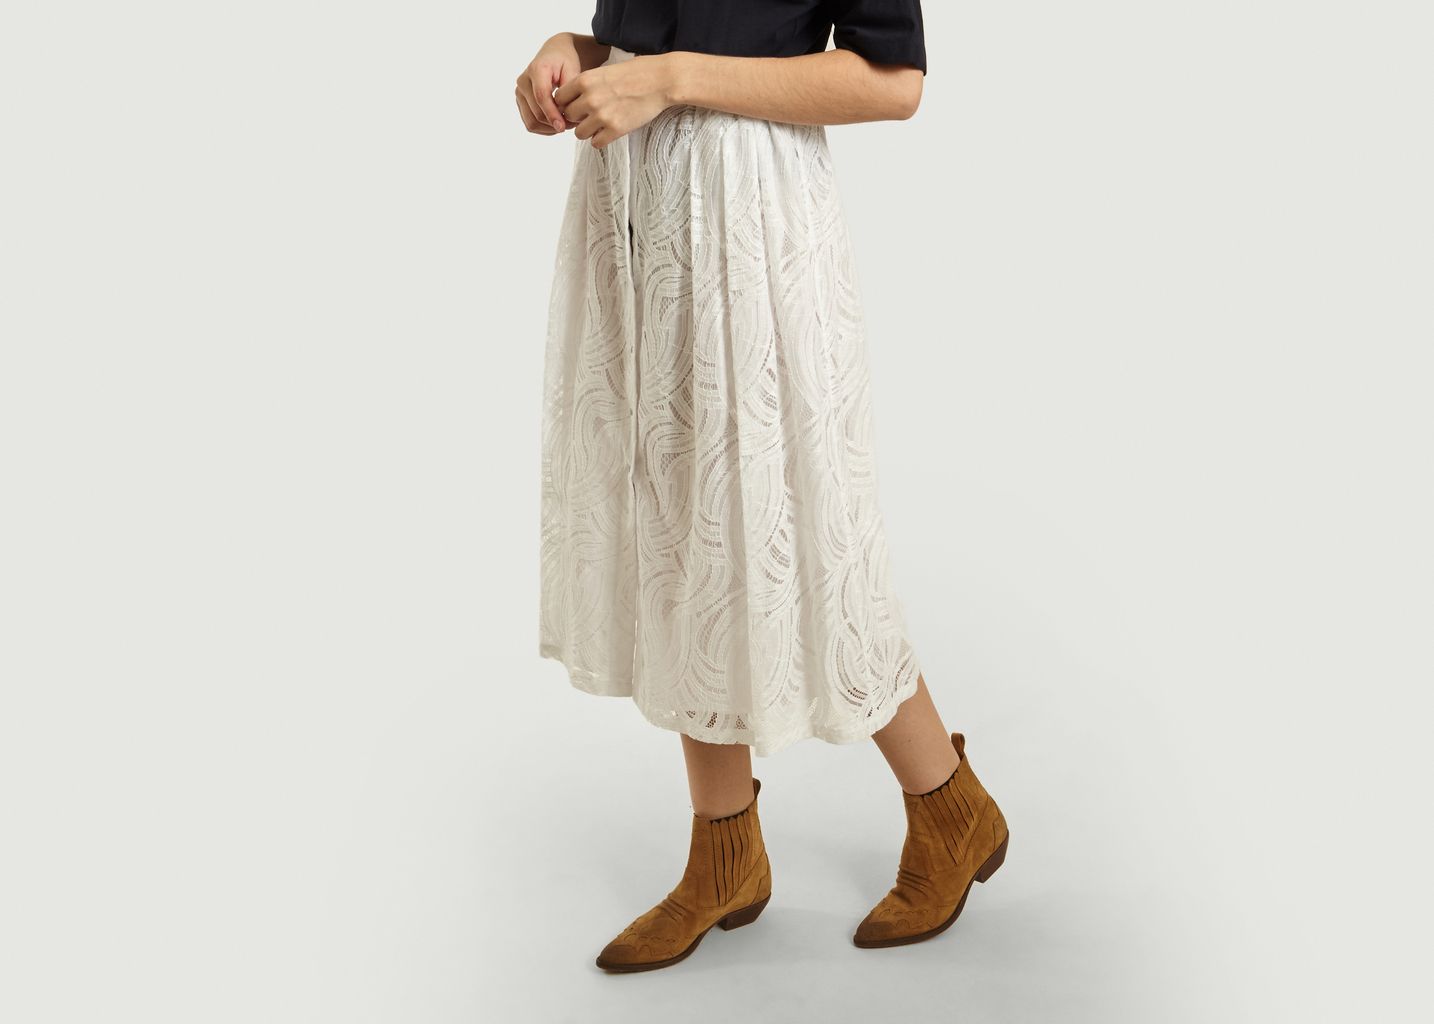  Mendes Long Embroidered Skirt - Roseanna